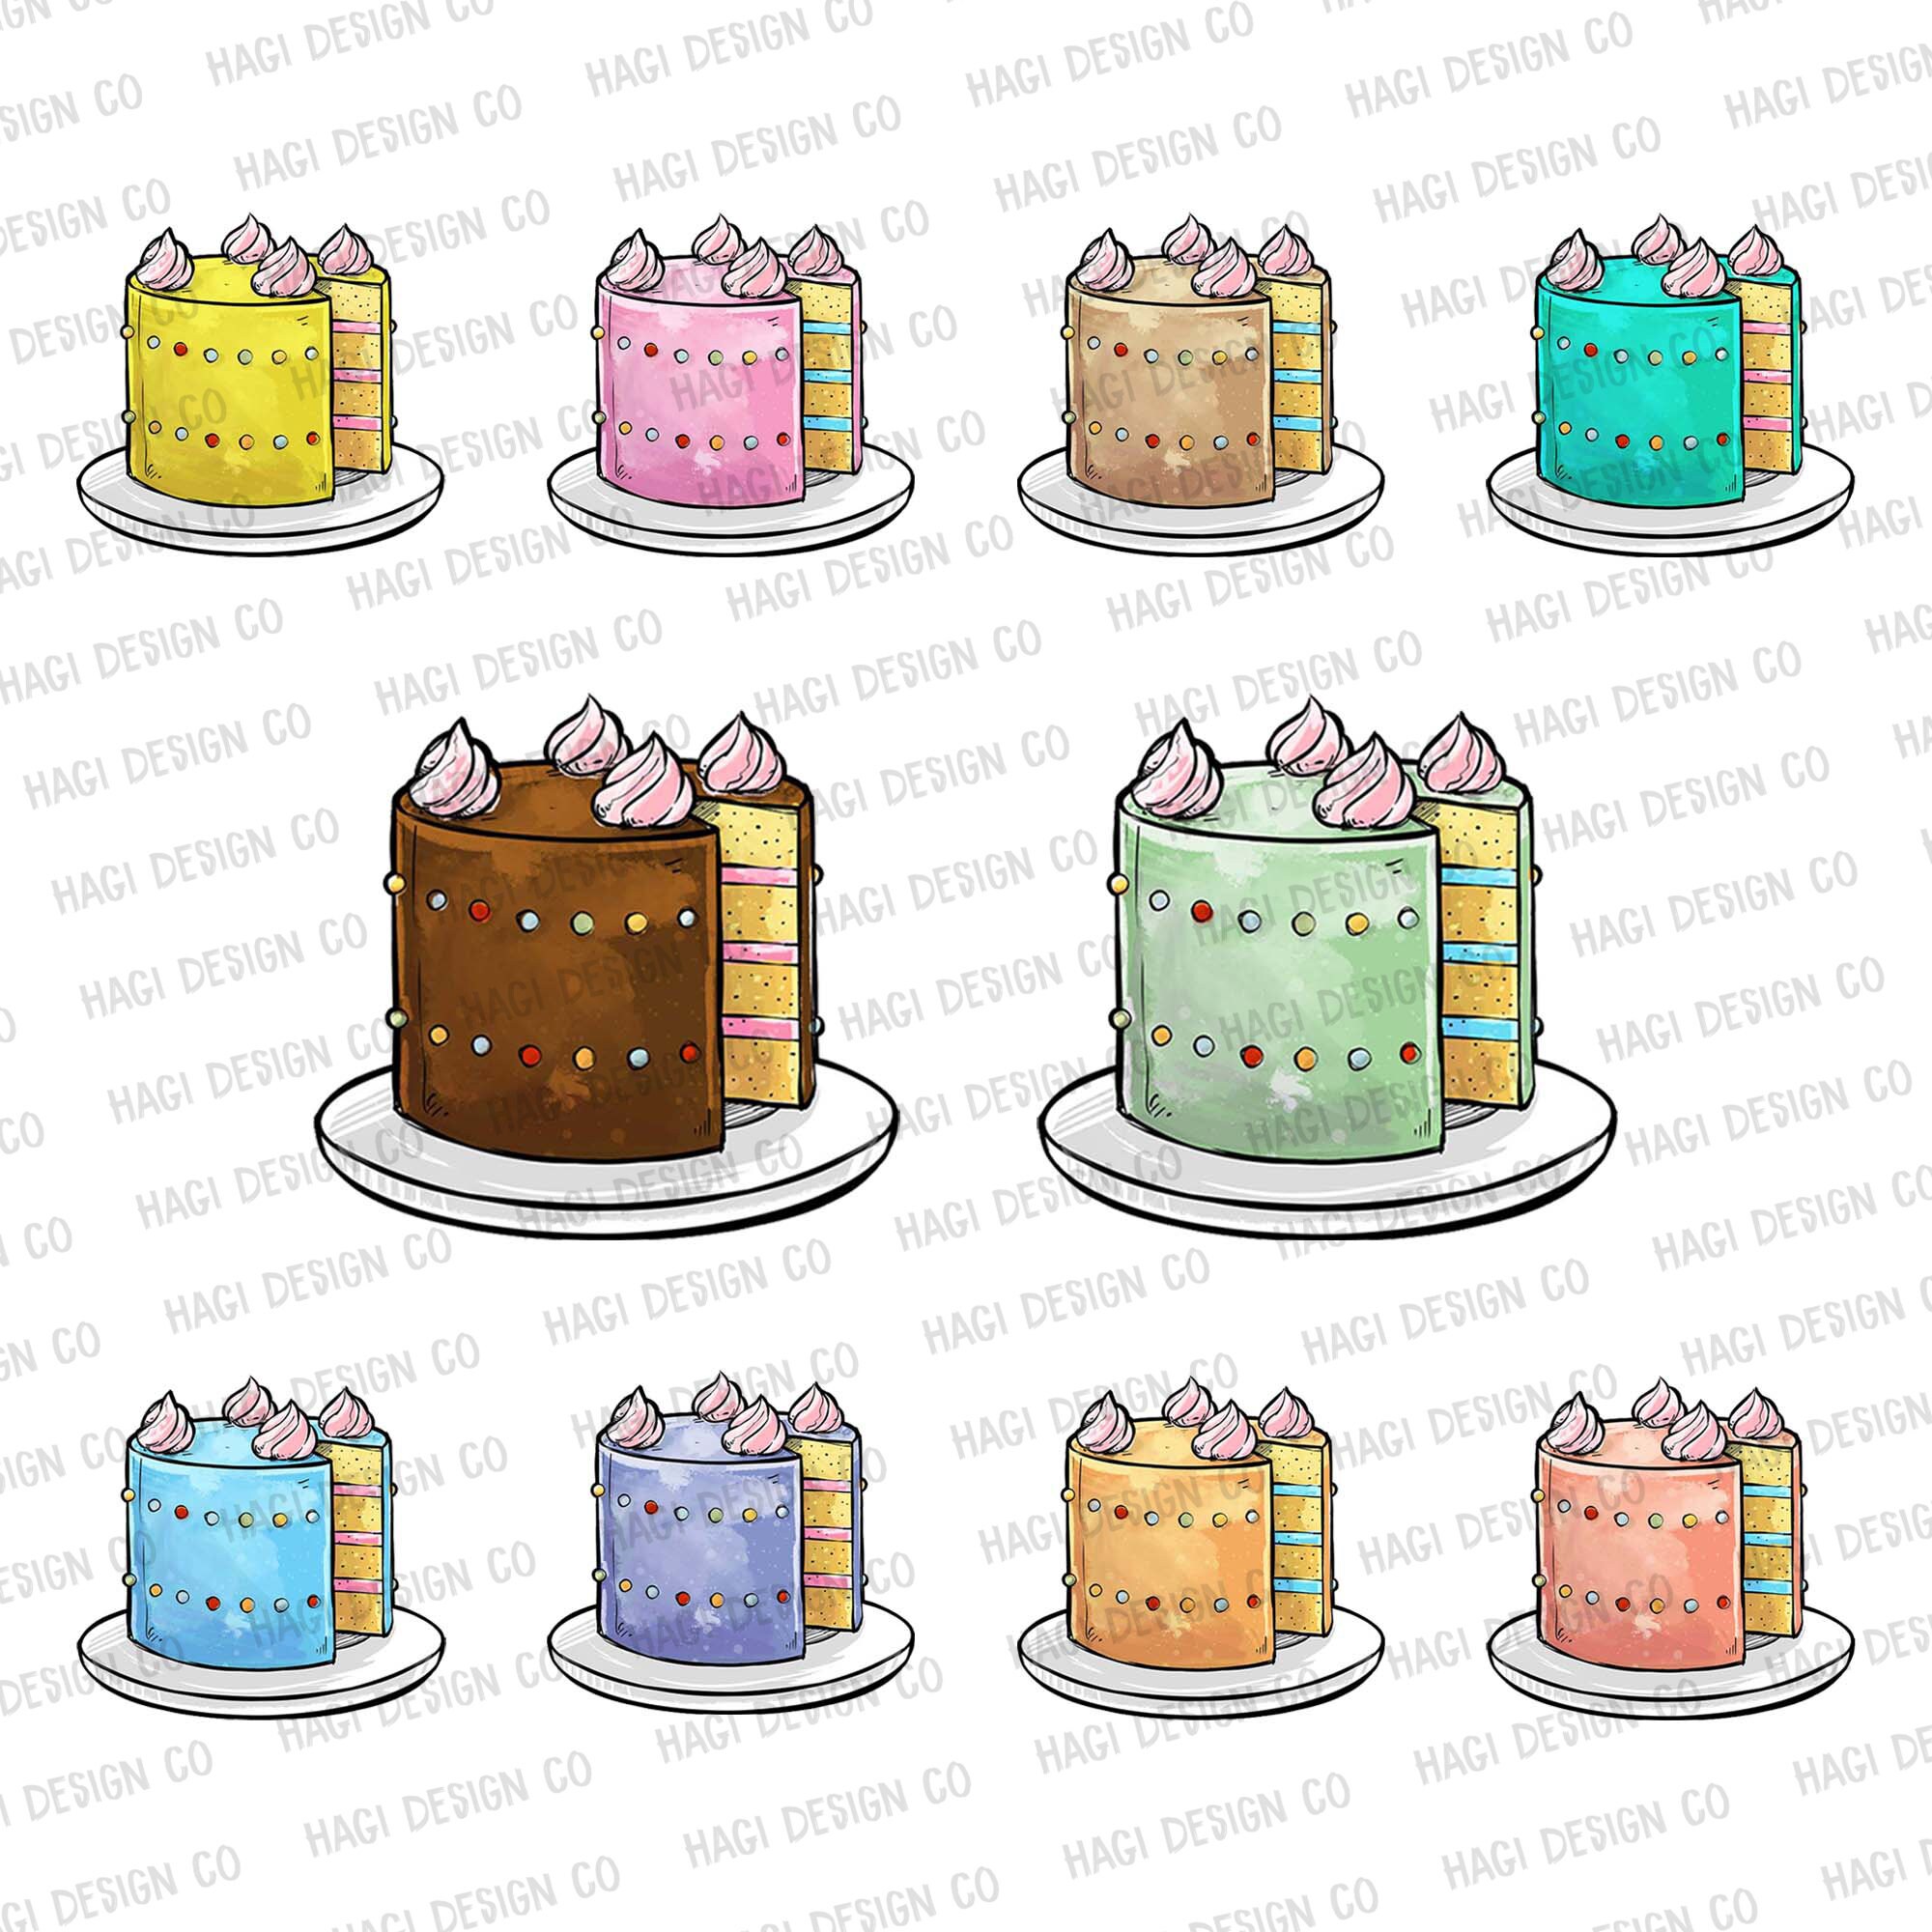 Digital Detailed Line Art Cake and Cupcakes Stock Illustration   Illustration of dessert food 113792531